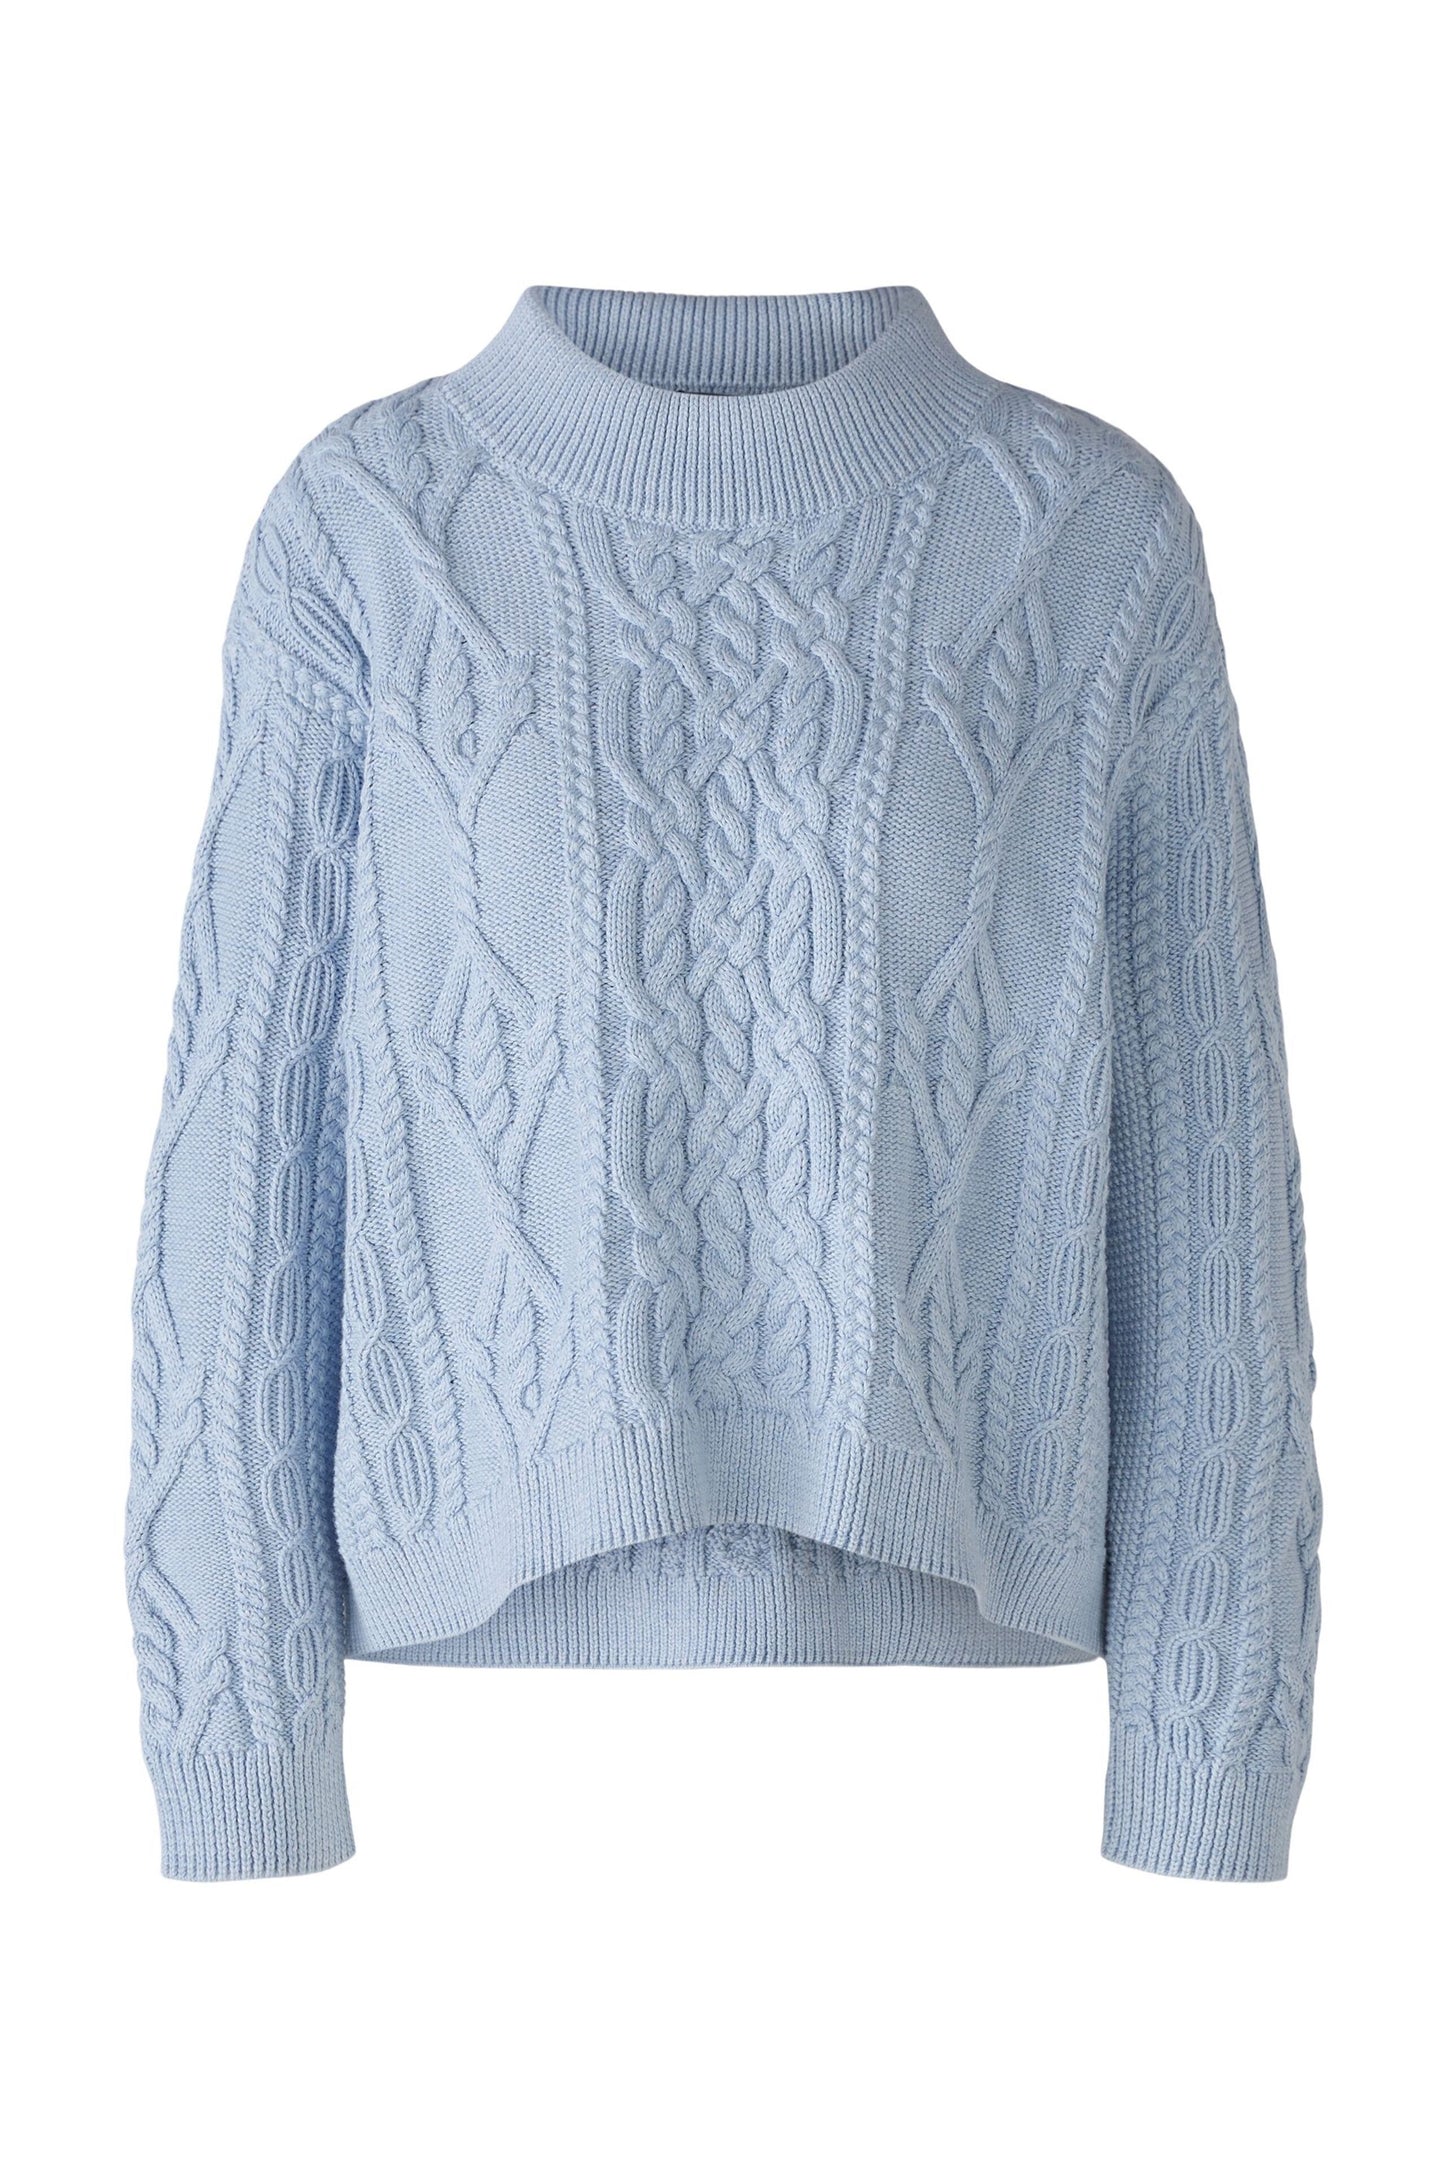 Oui Pale Blue Sweater